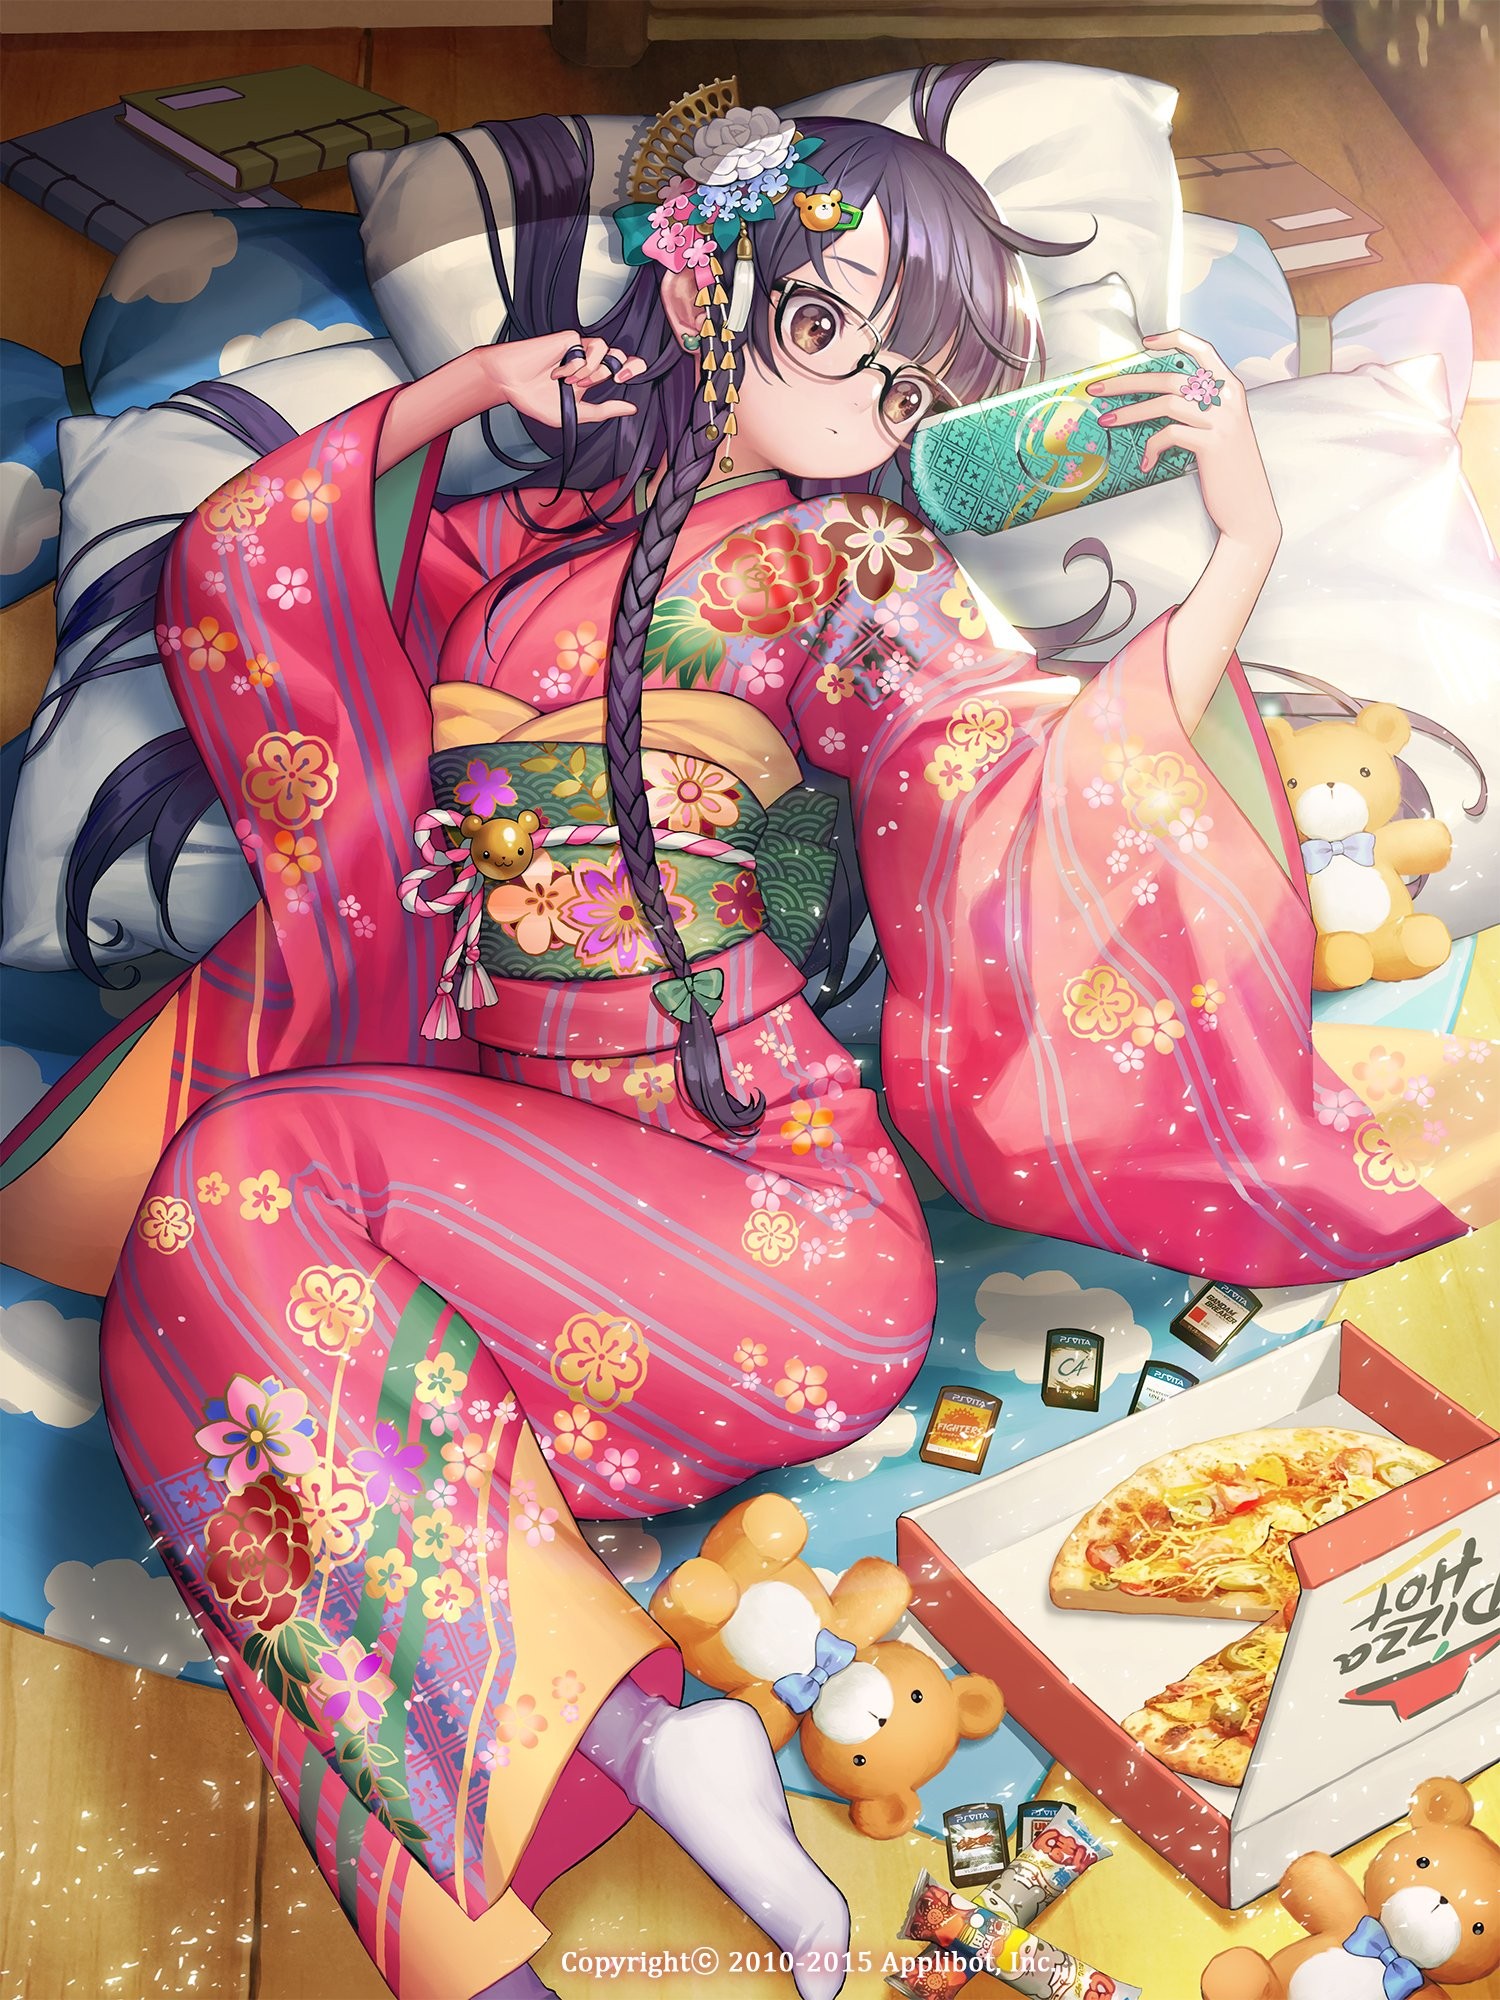 Anime 1500x2000 anime anime girls Furyou Michi ~Gang Road~ kimono long hair glasses PlayStation Vita women with glasses traditional clothing food pizza teddy bears plush toy